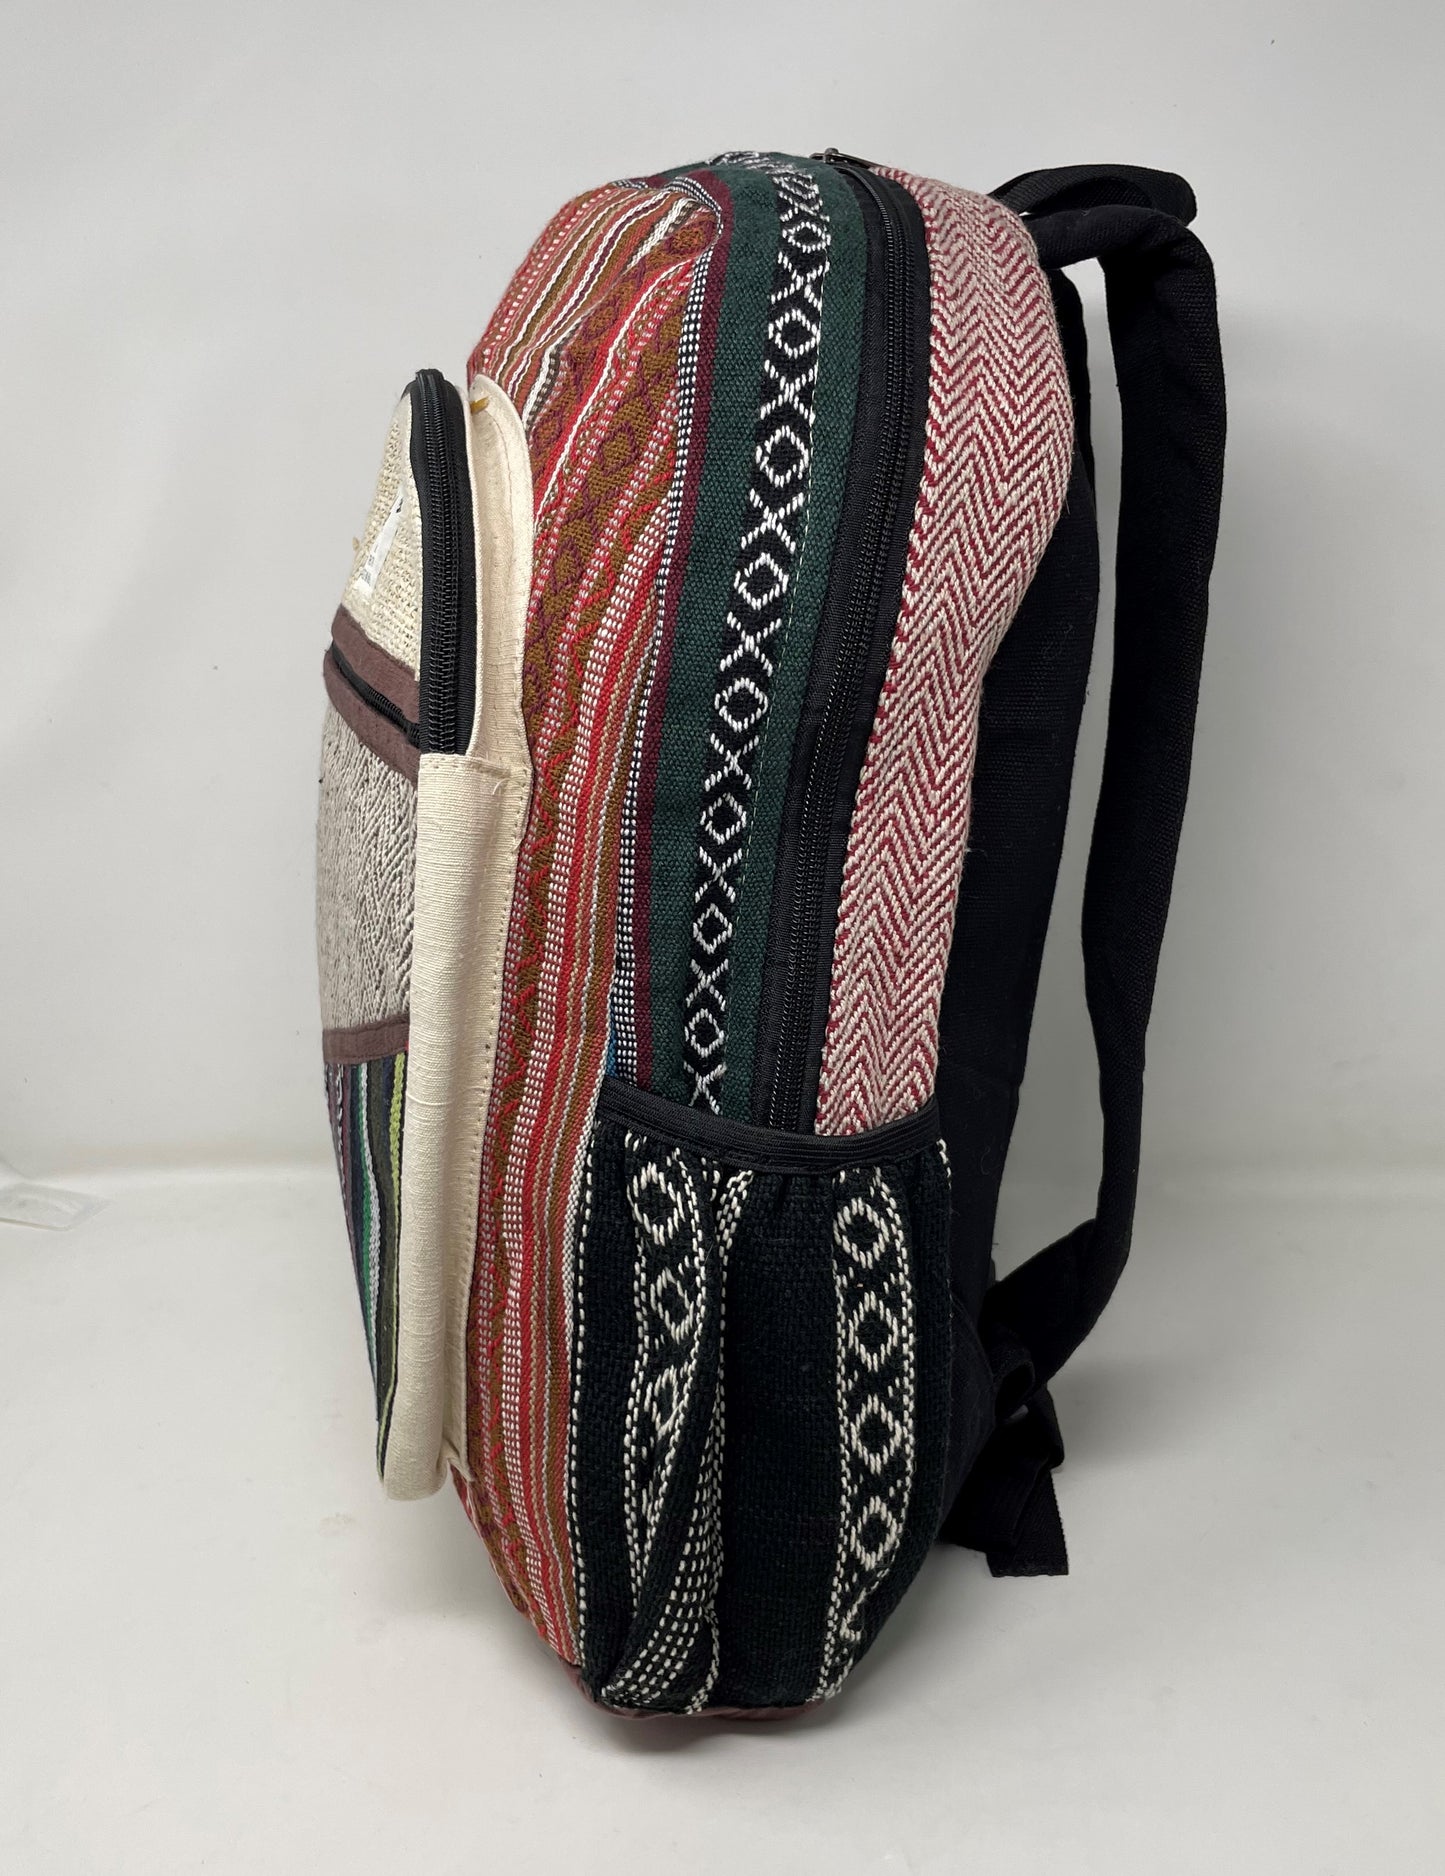 Unisex Himalayan Pure Hemp Large Multi Pocket Backpack with Laptop sleeve